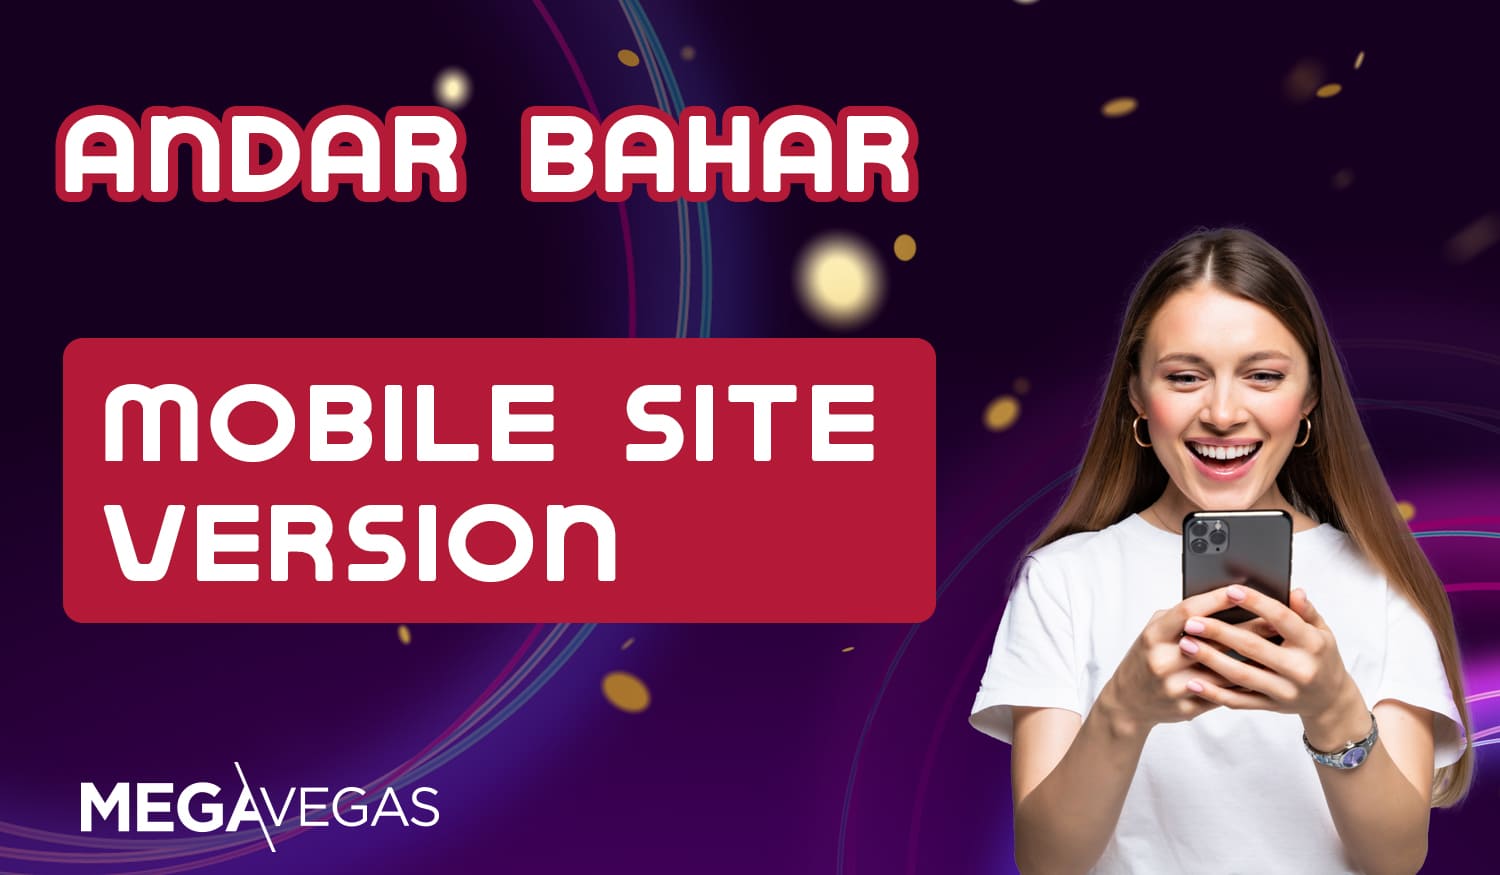 Play Andar Bahar using the mobile version of Mega Vegas website